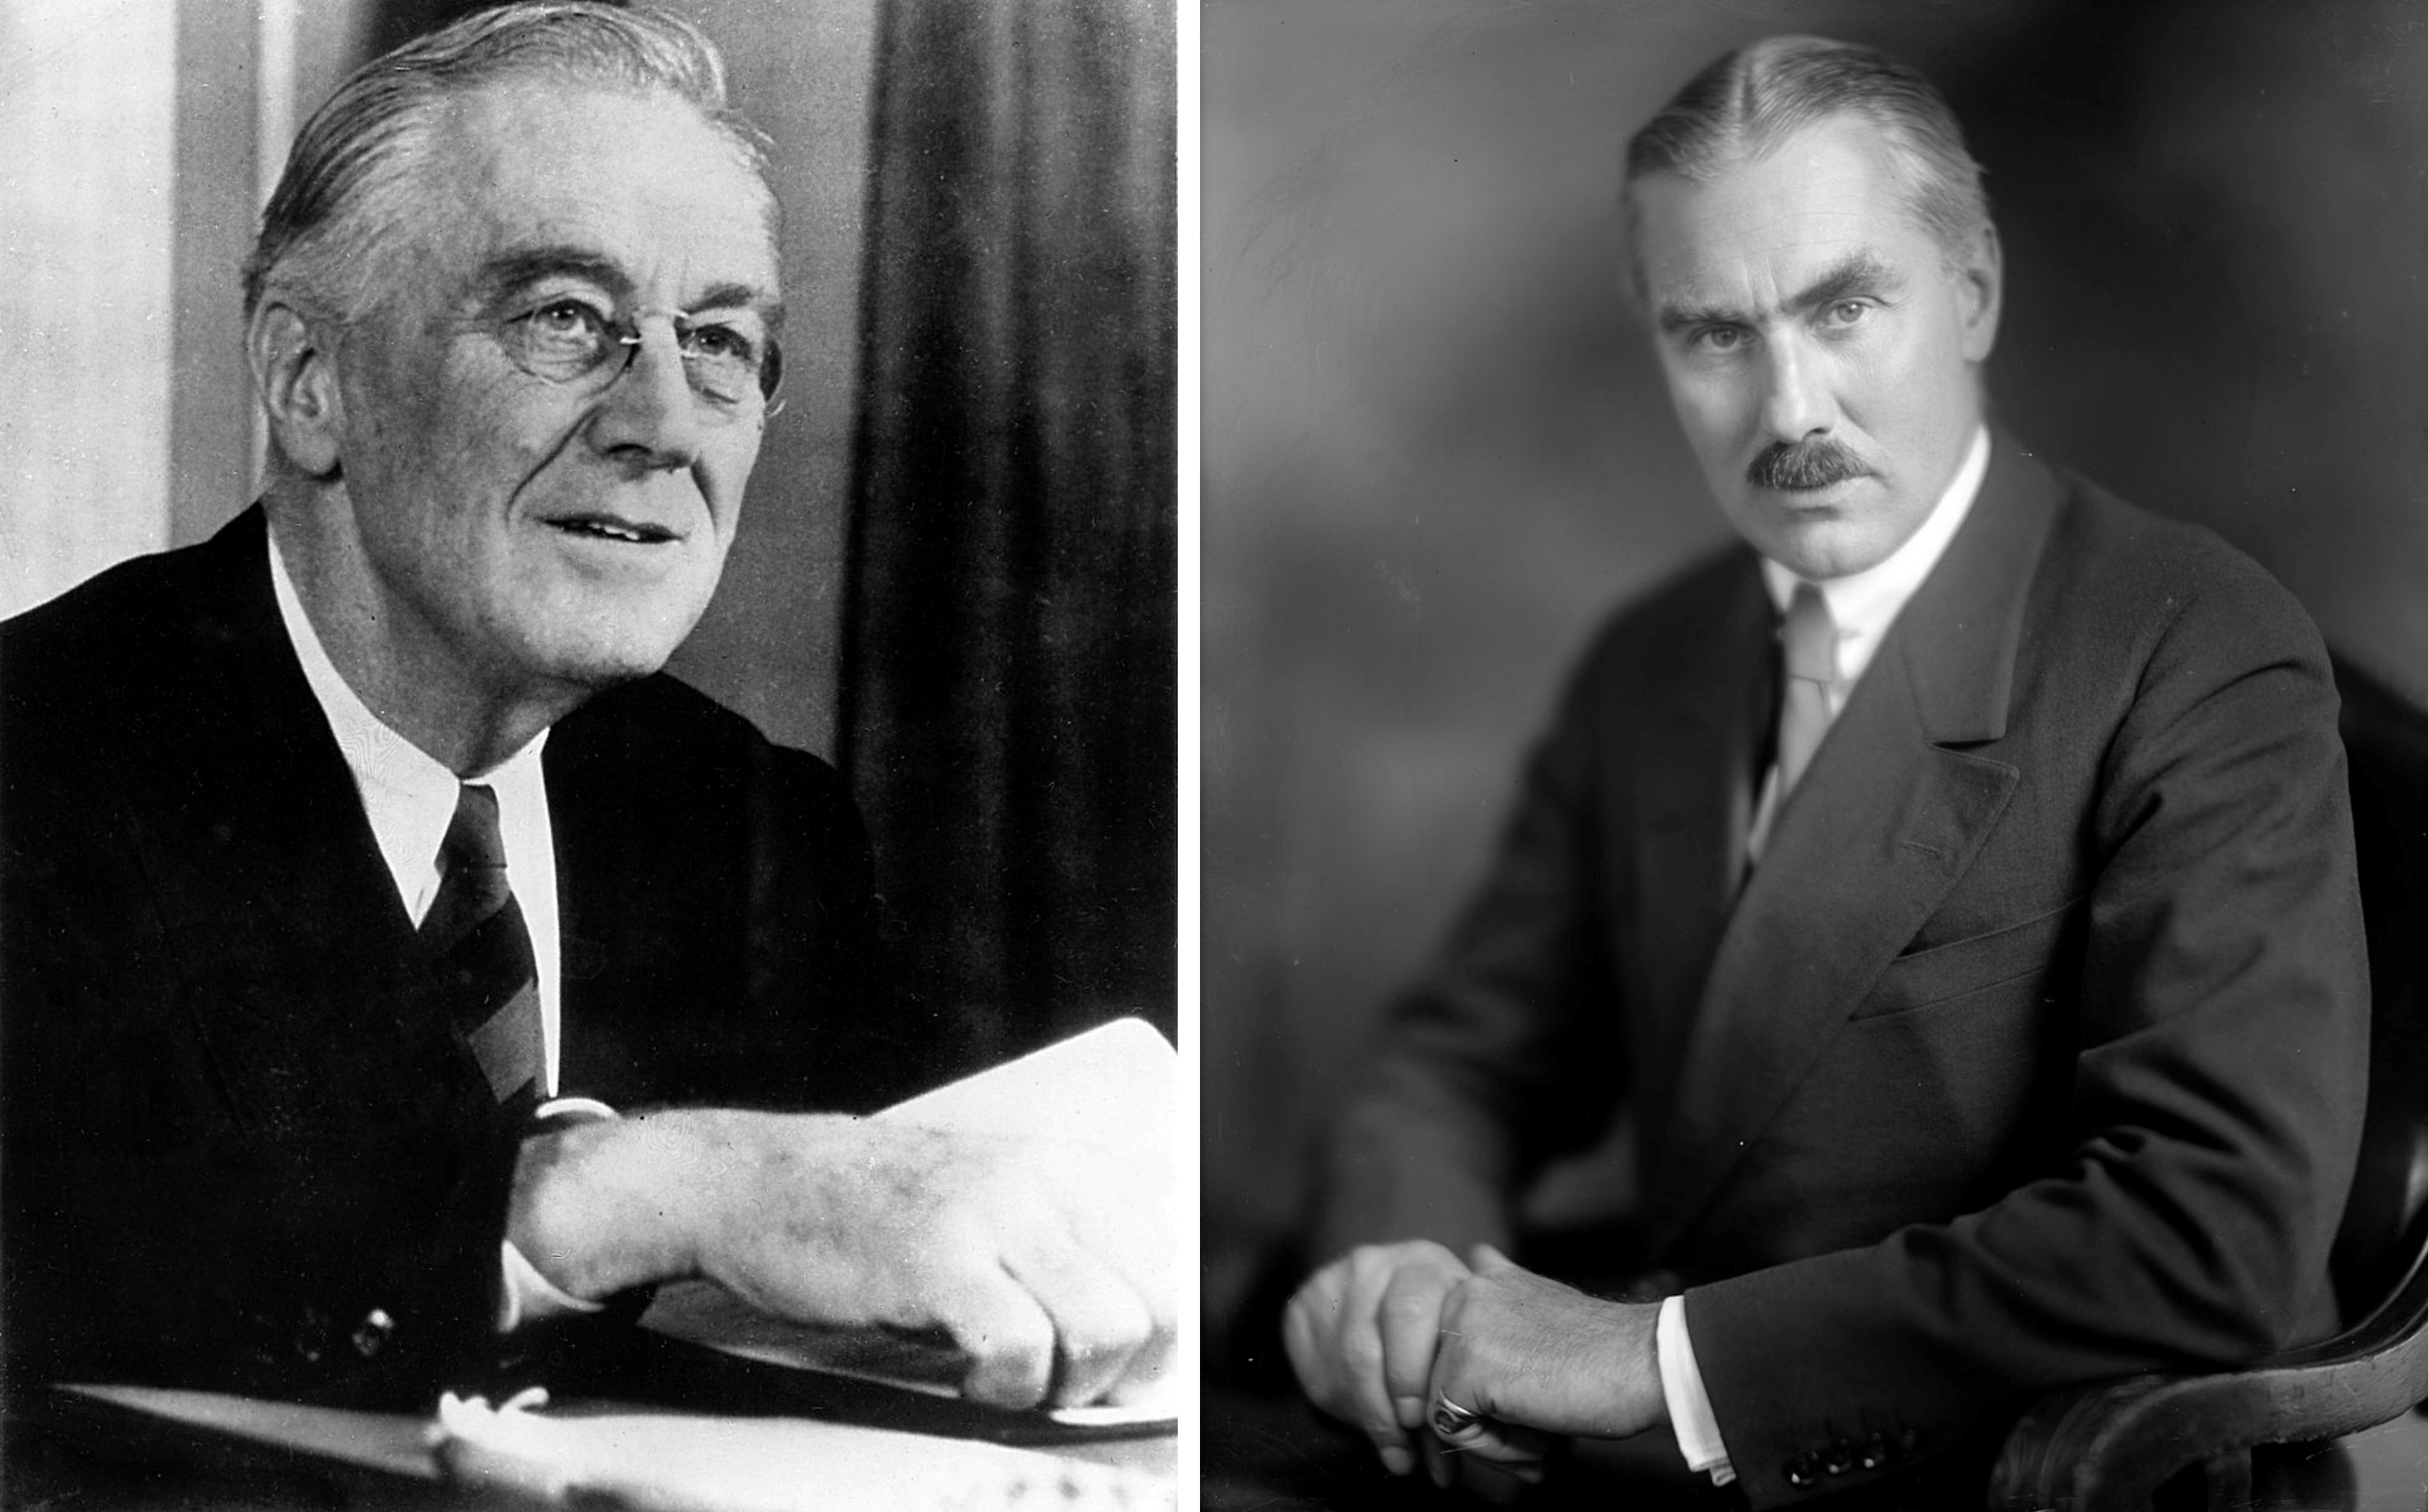 On the left, U.S. President Franklin D. Roosevelt. On the right, Joseph Grew.